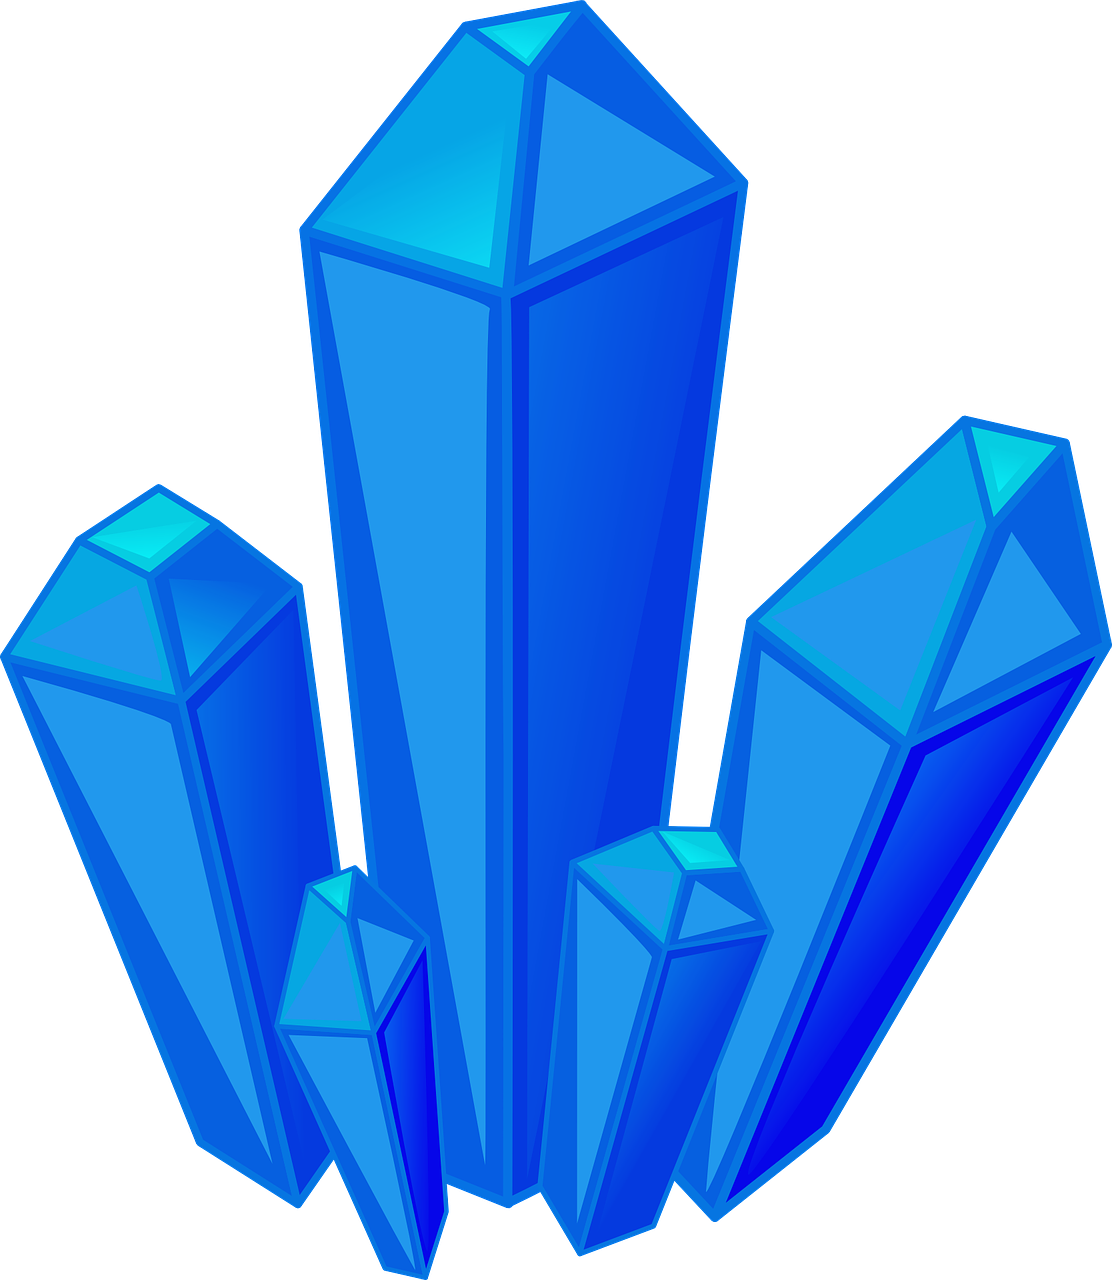 Crystal PNG Image File